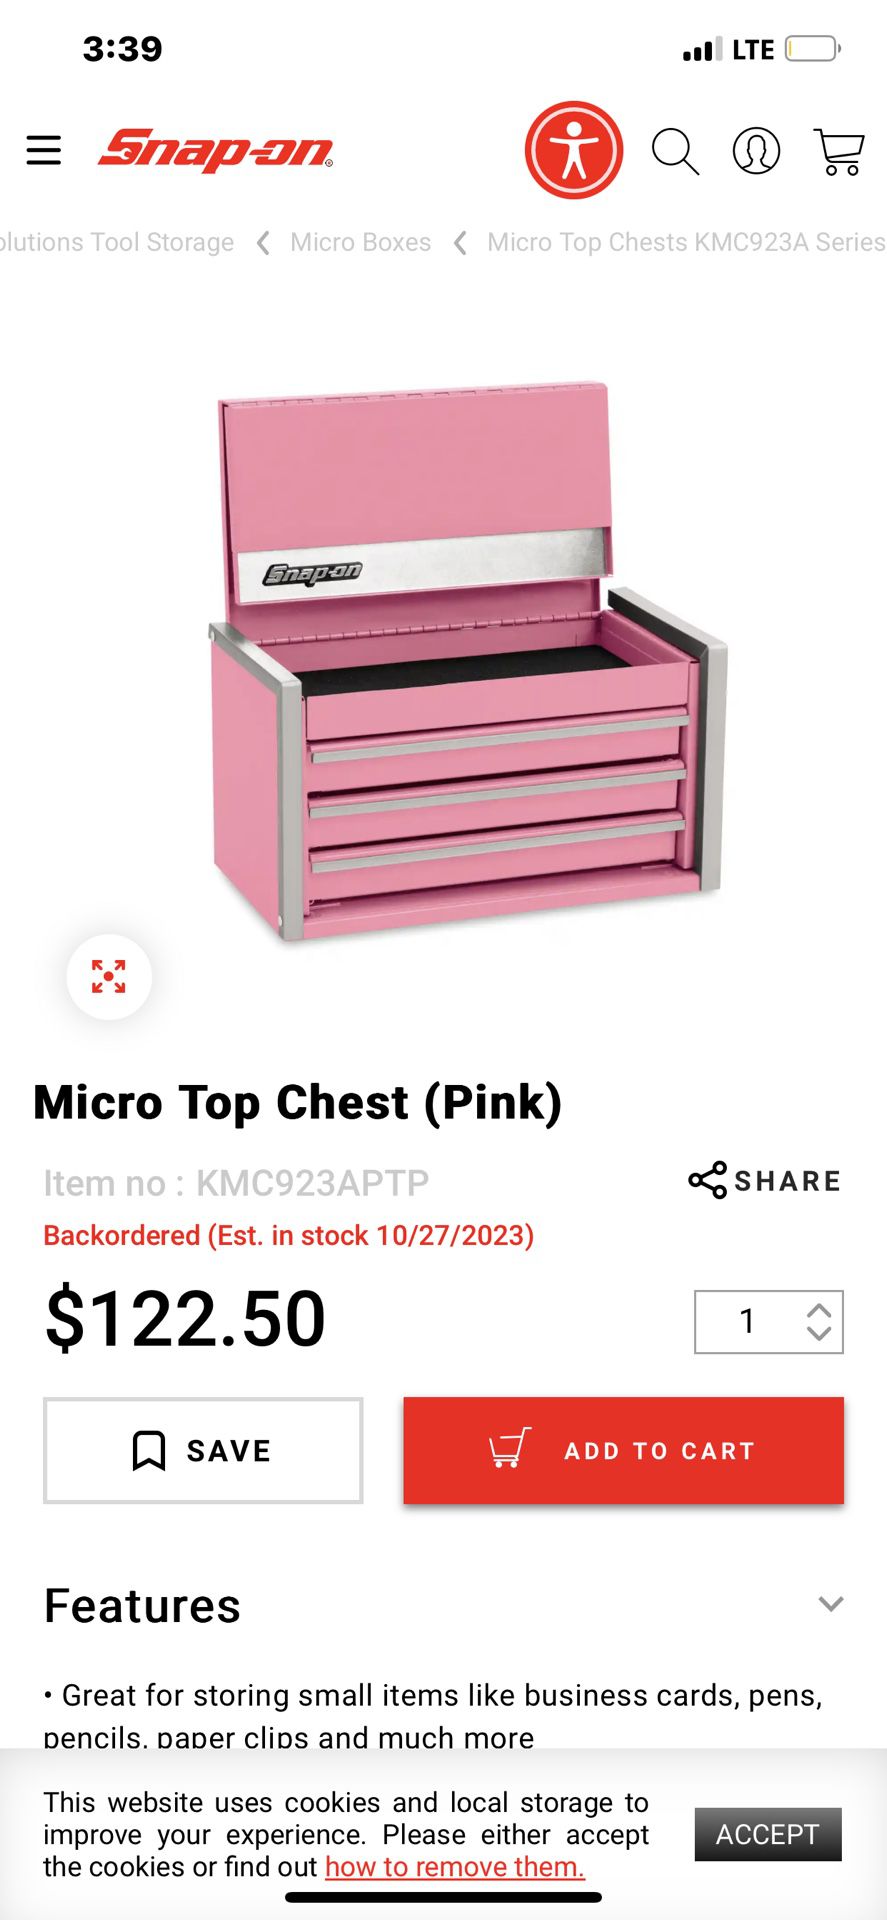 Micro Top Chest (Pink), KMC923APTP